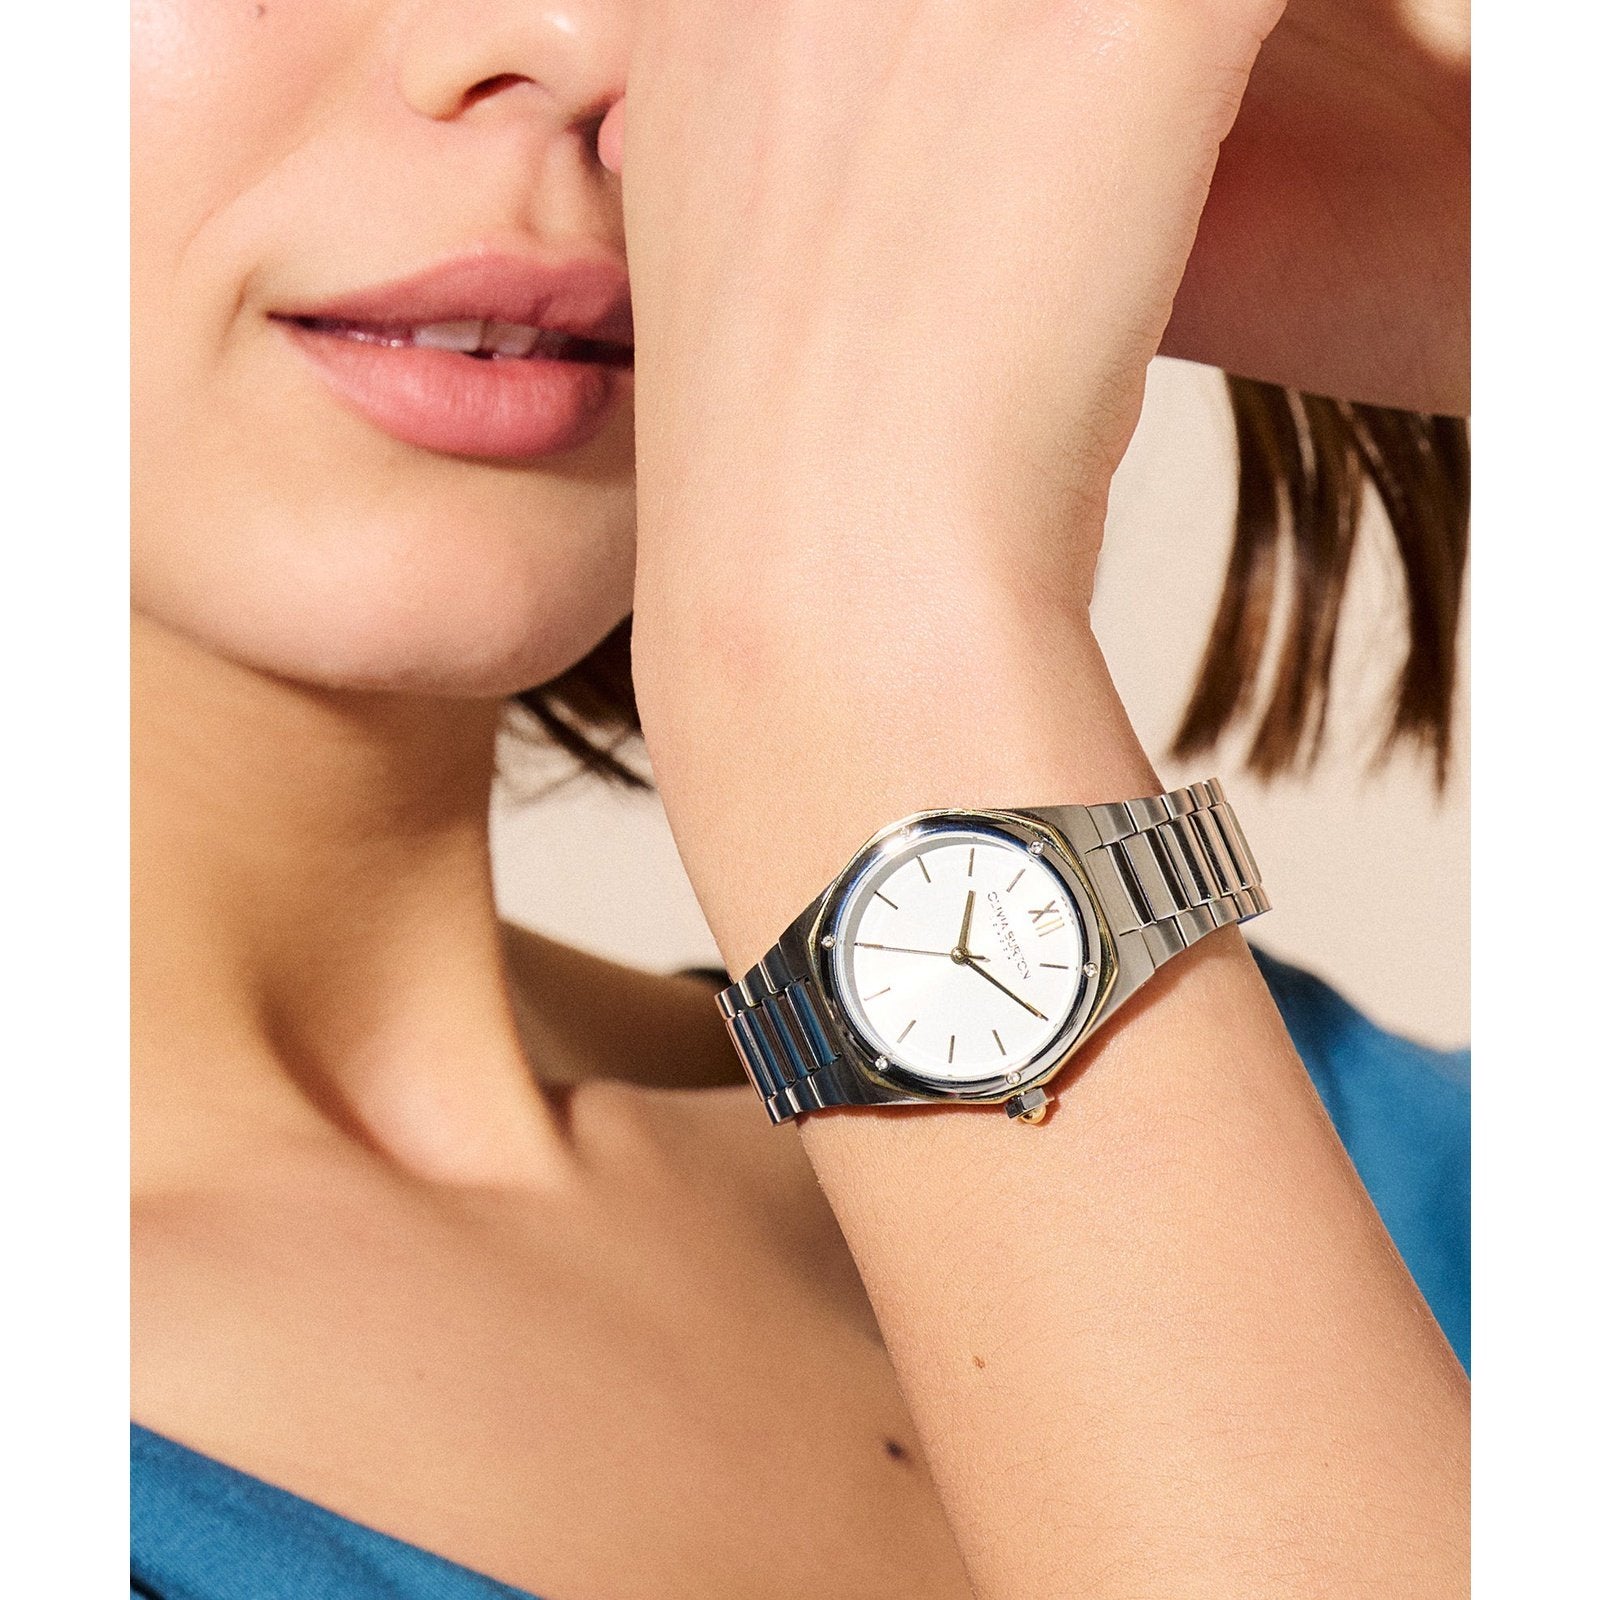 Hexa White Gold and Silver Bracelet Watch 24000031 Olivia Burton